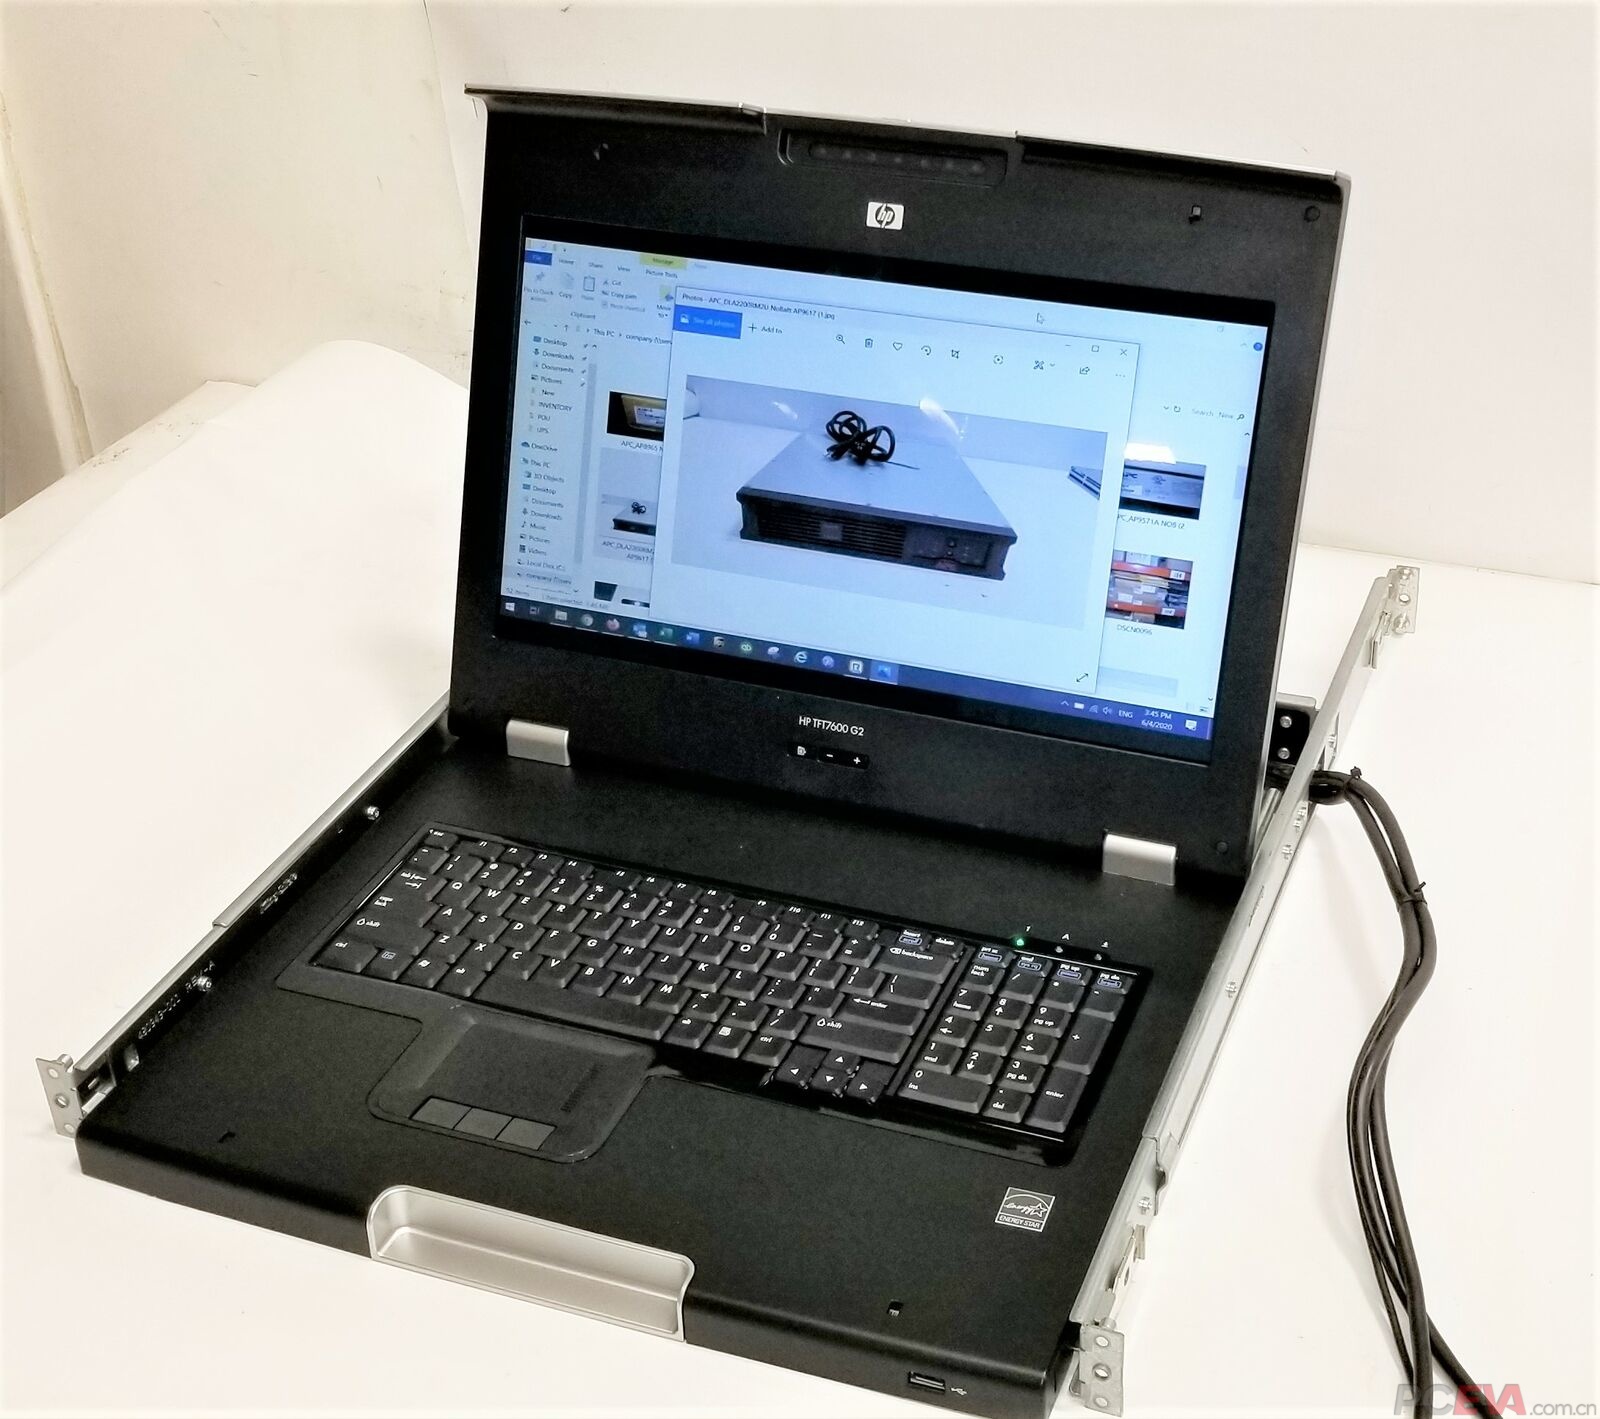 HP TFT7600 G2 1U RKM Keyboard &amp; Monitor 17.3°WXGA+ touch pad AZ870A 612371-001 .jpg